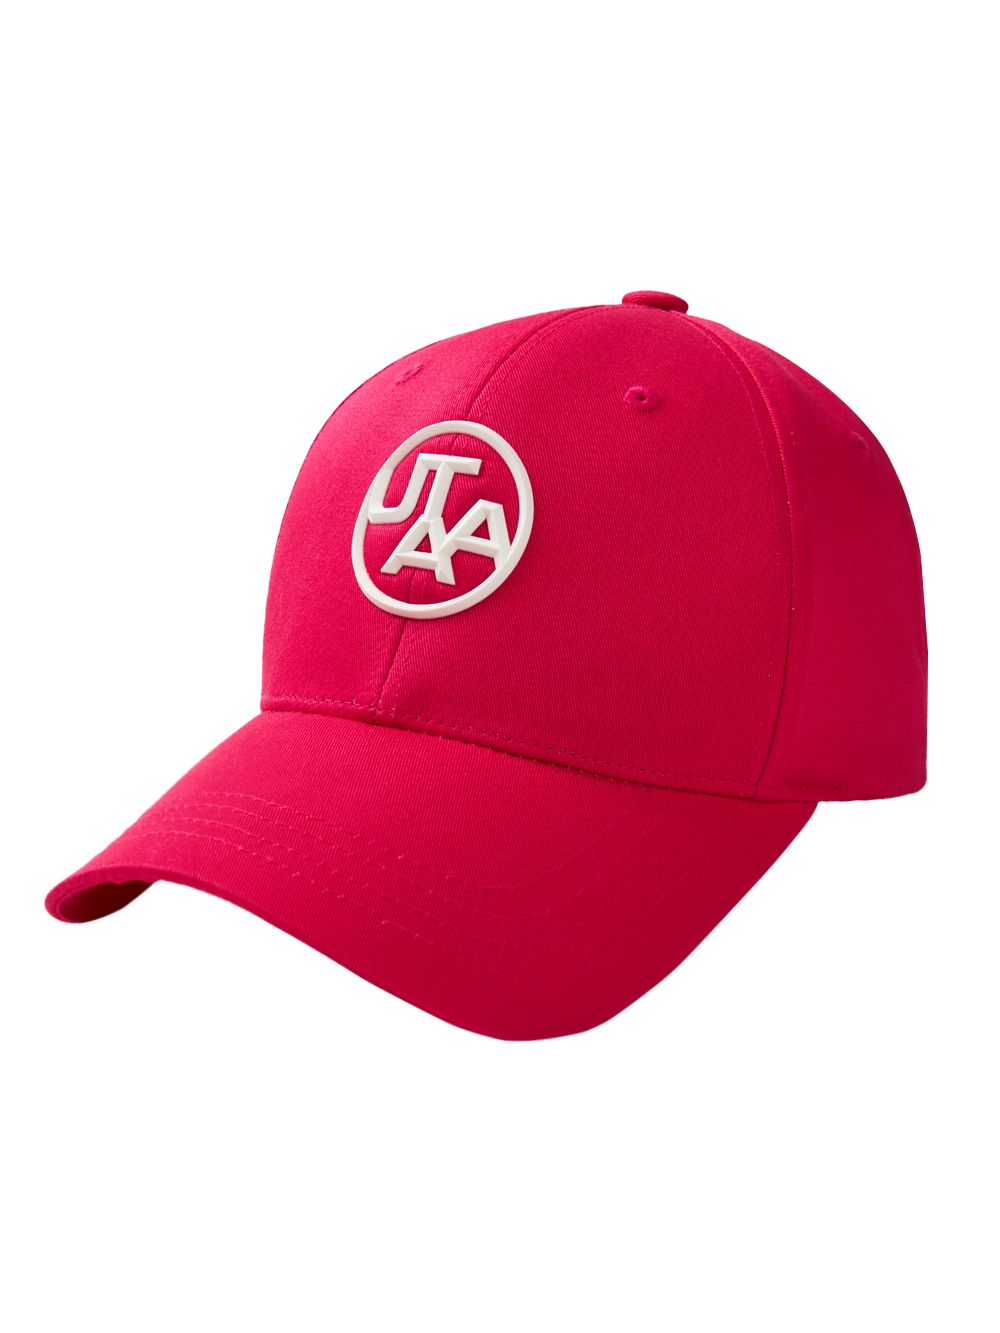 UTAA Figure Emblem Basic Cap : Pink (UC0GCU117PK)